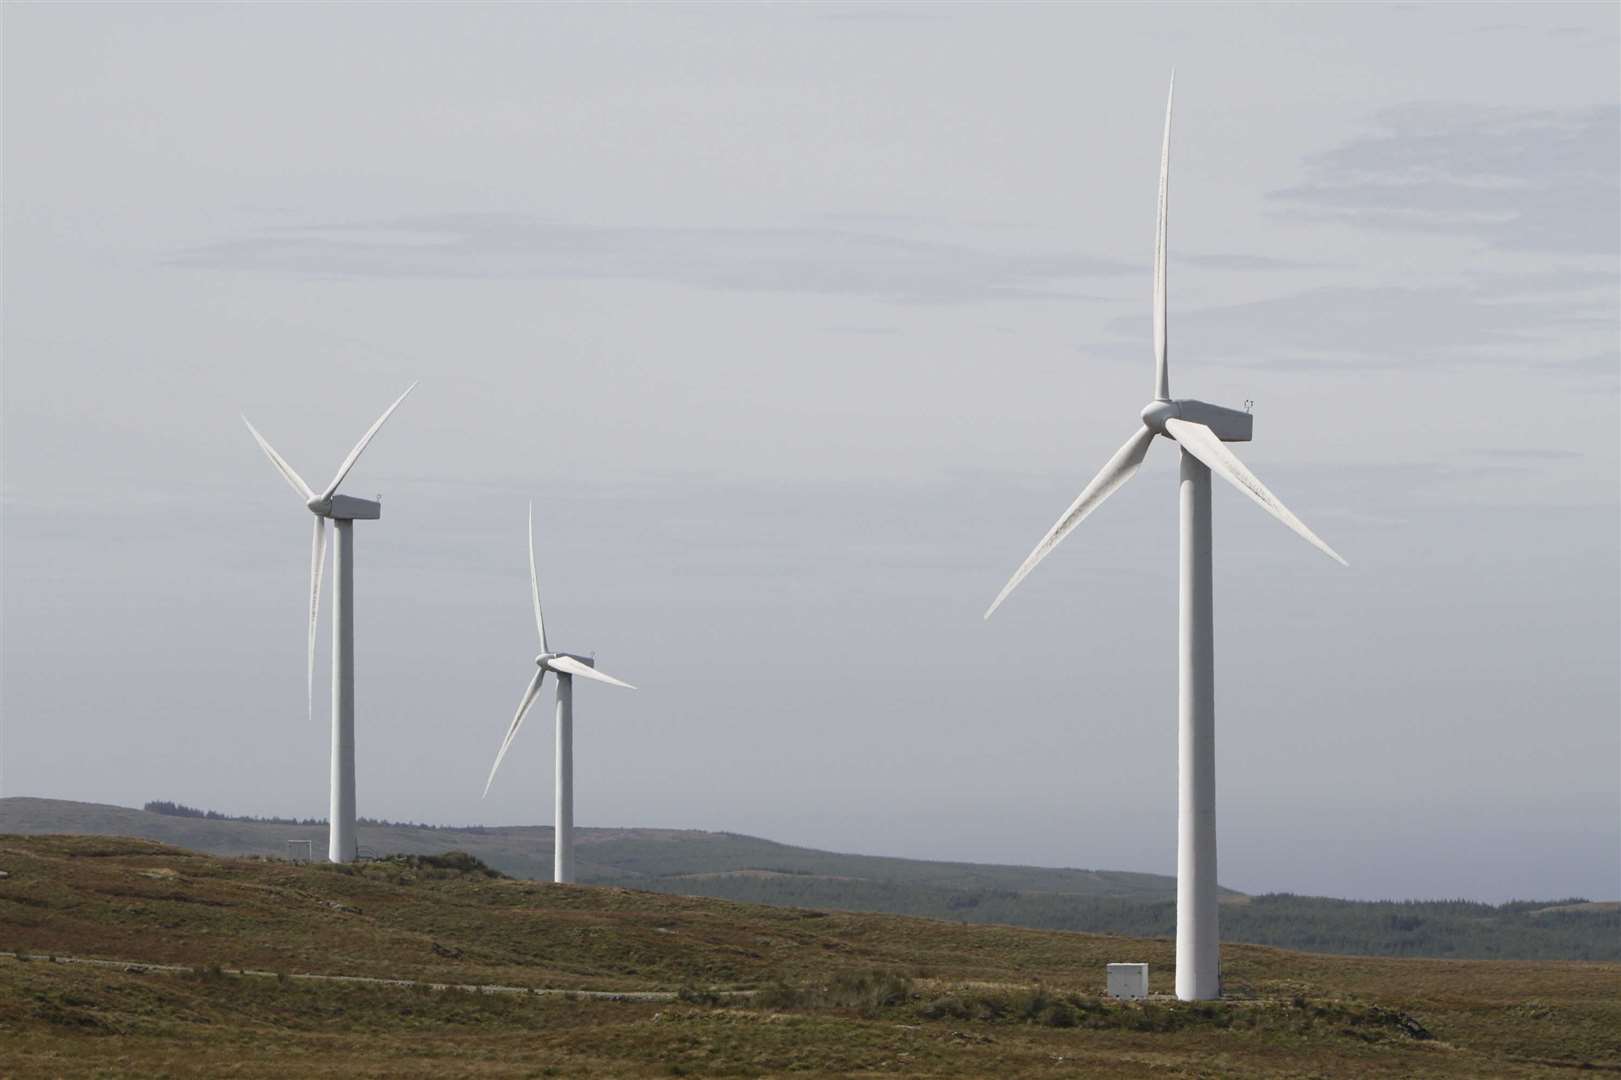 Scottishpower's Beinn an tuirc wind farm.